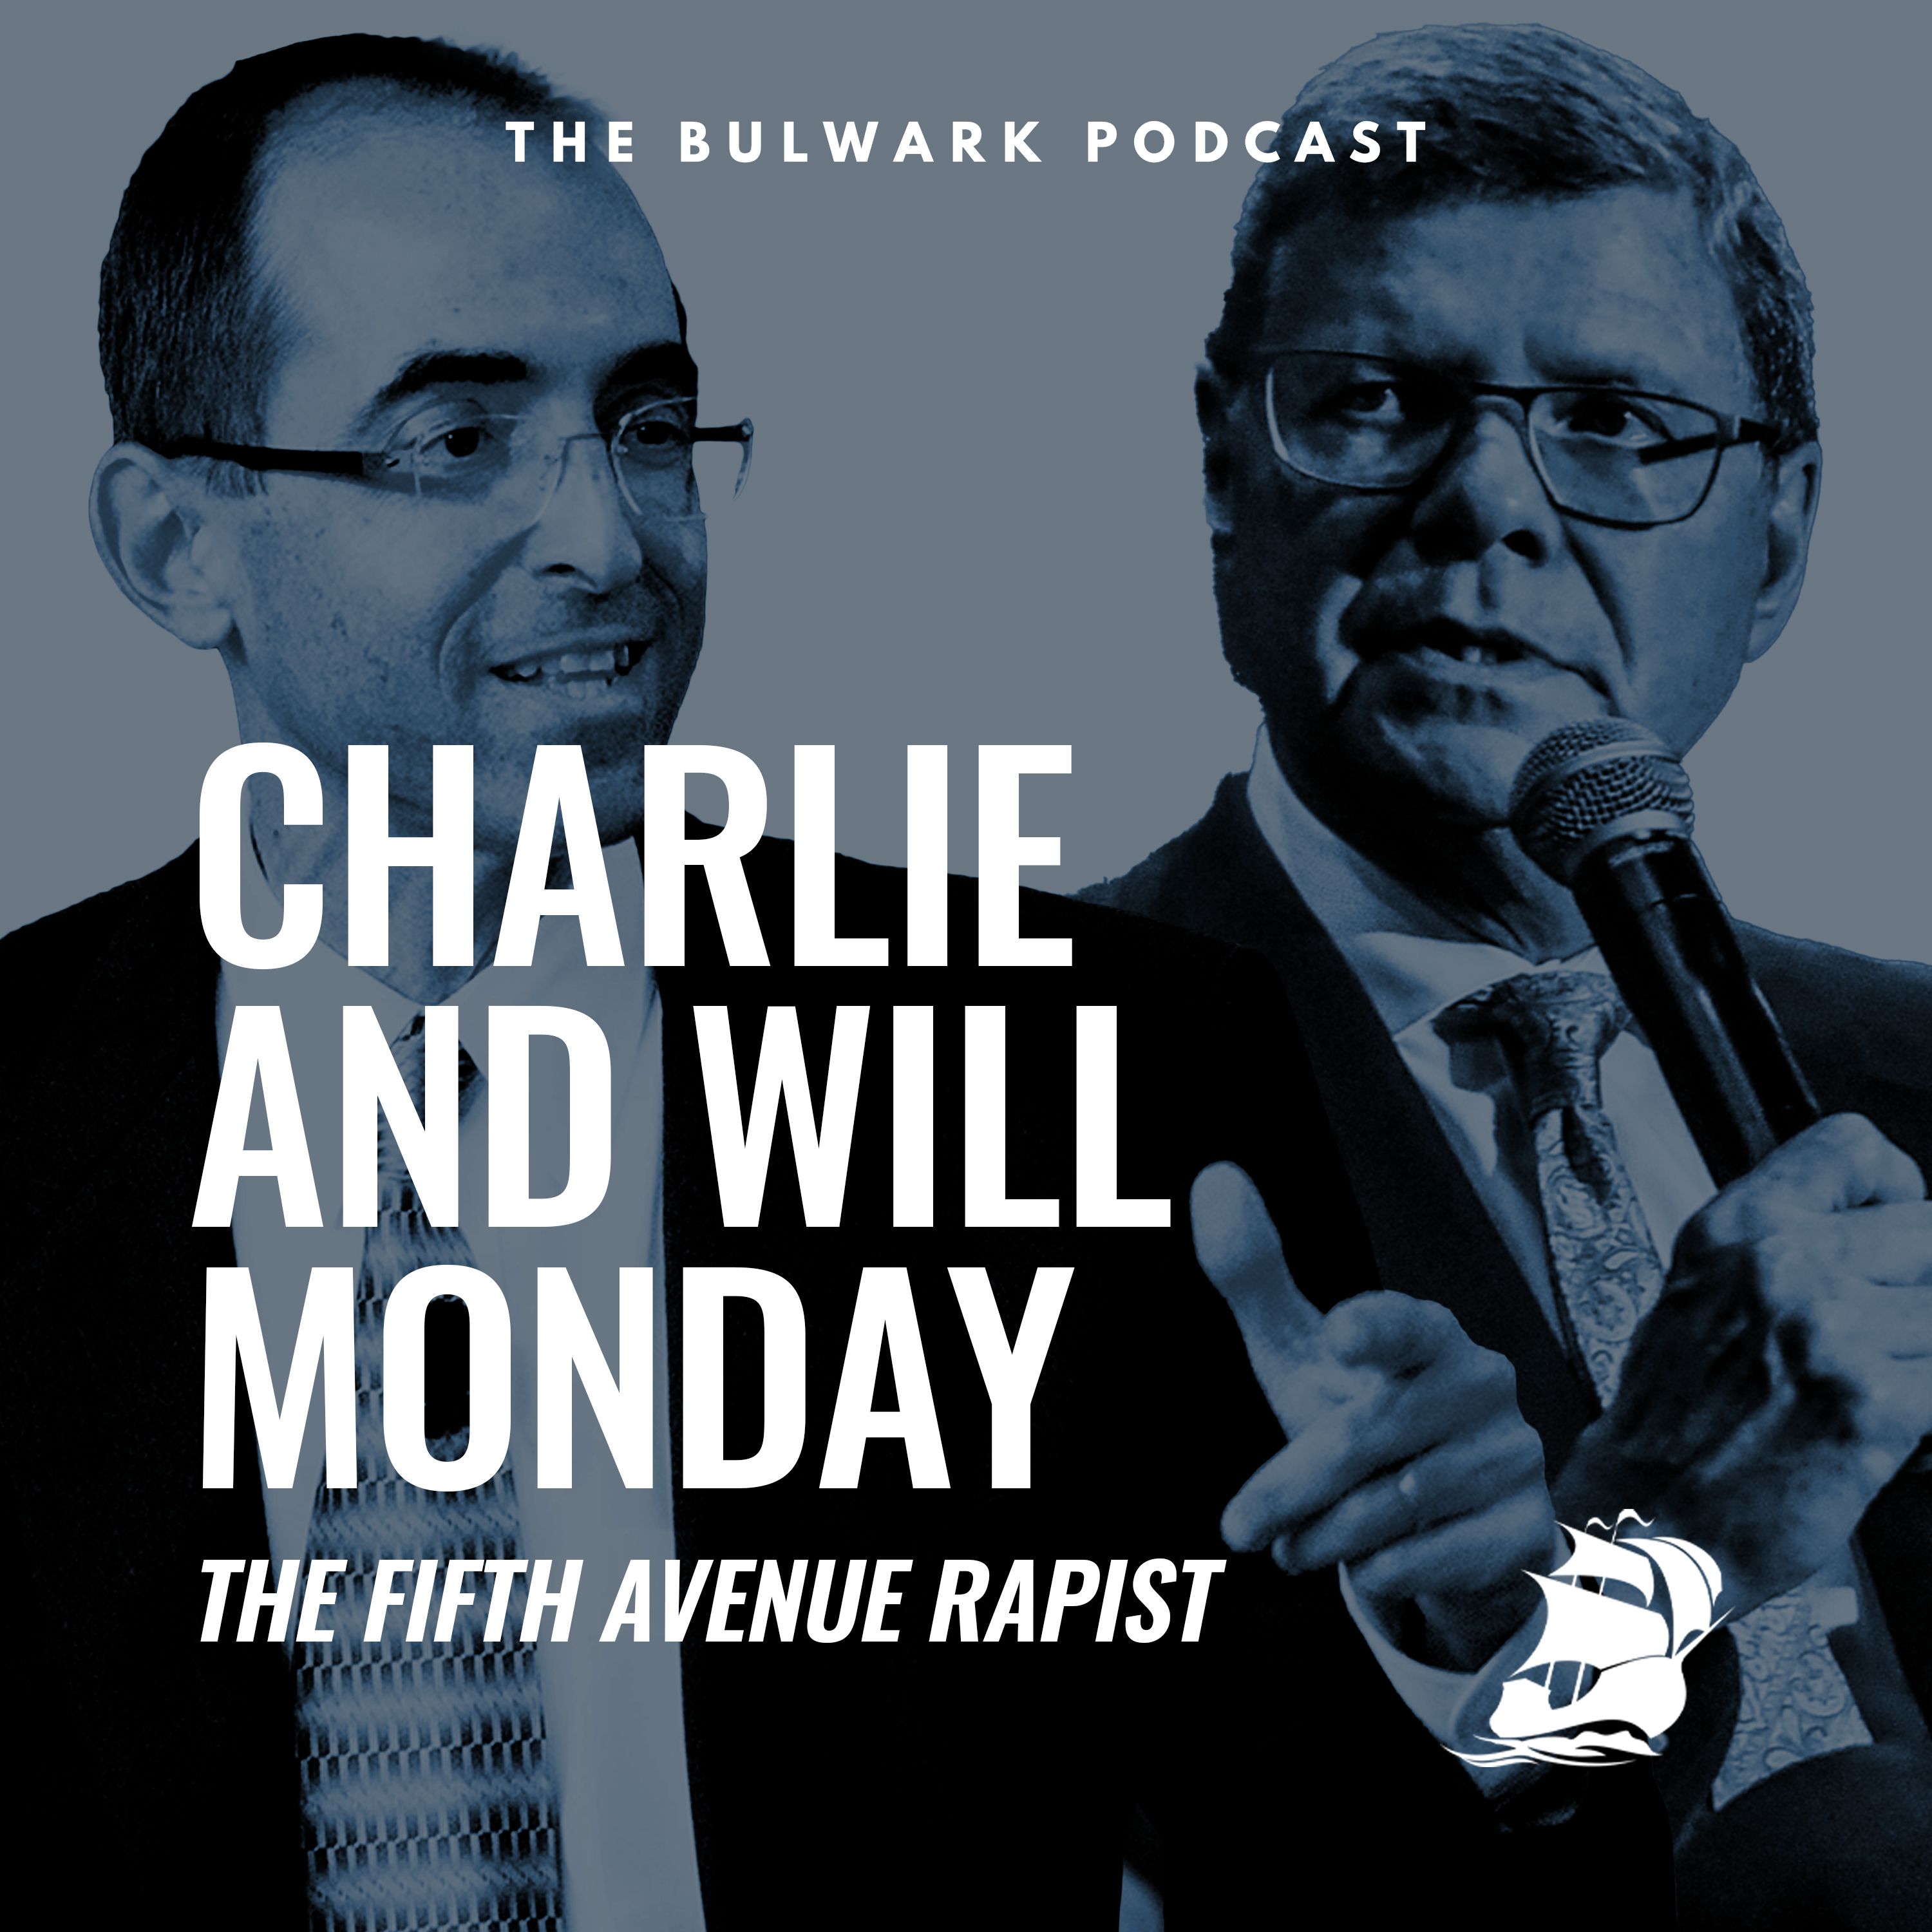 The Fifth Avenue Rapist by The Bulwark Podcast